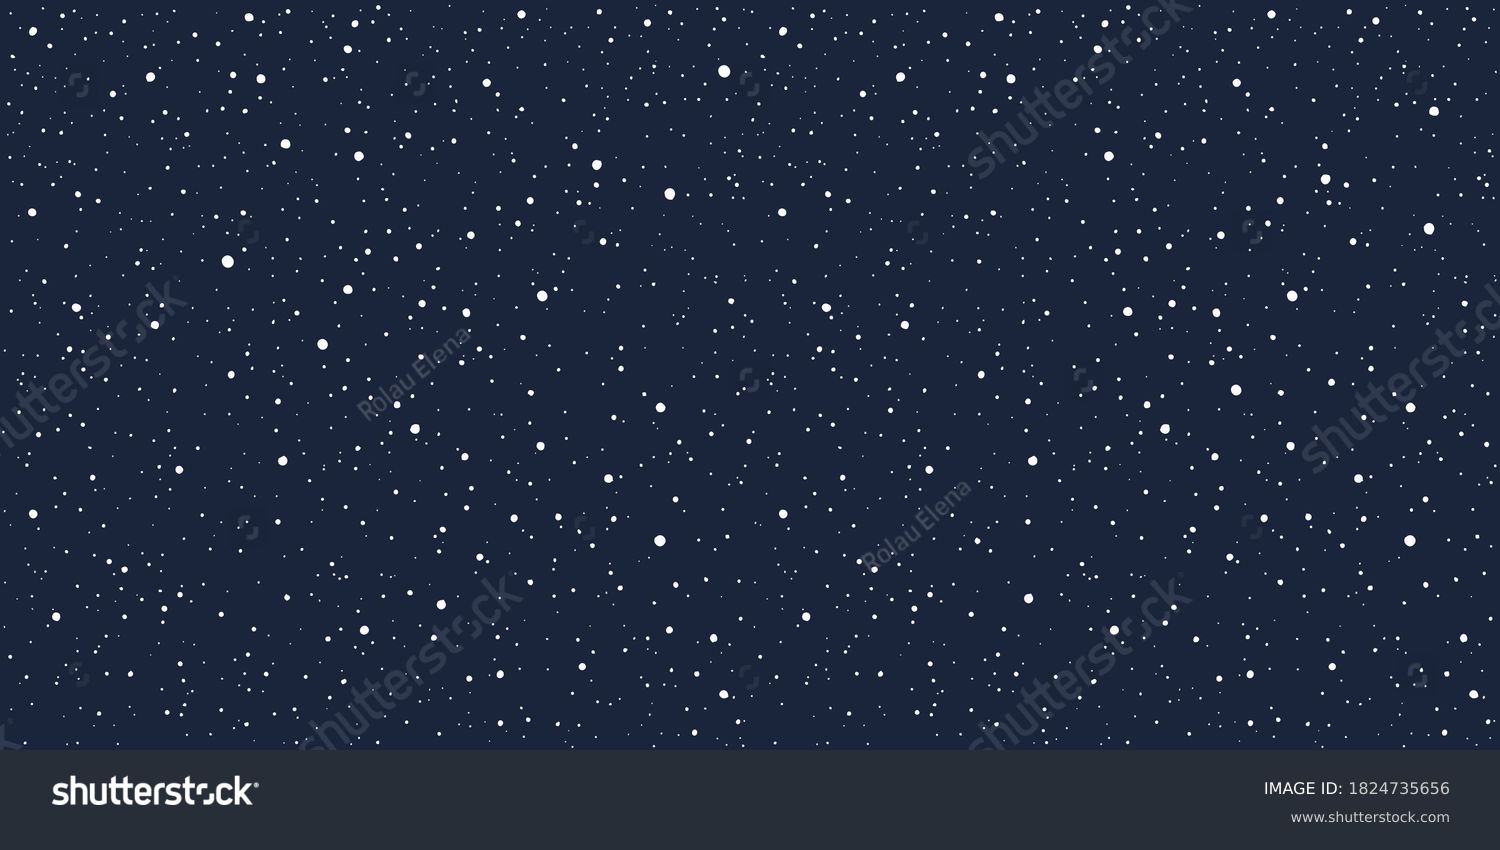 Сosmic, cosmos, night sky, galaxy with tiny dots, stars pattern, starry text background. Elongated rectangle shape. Hand drawn falling snow, dot snowflakes, specks, splash, spray winter texture.  #1824735656